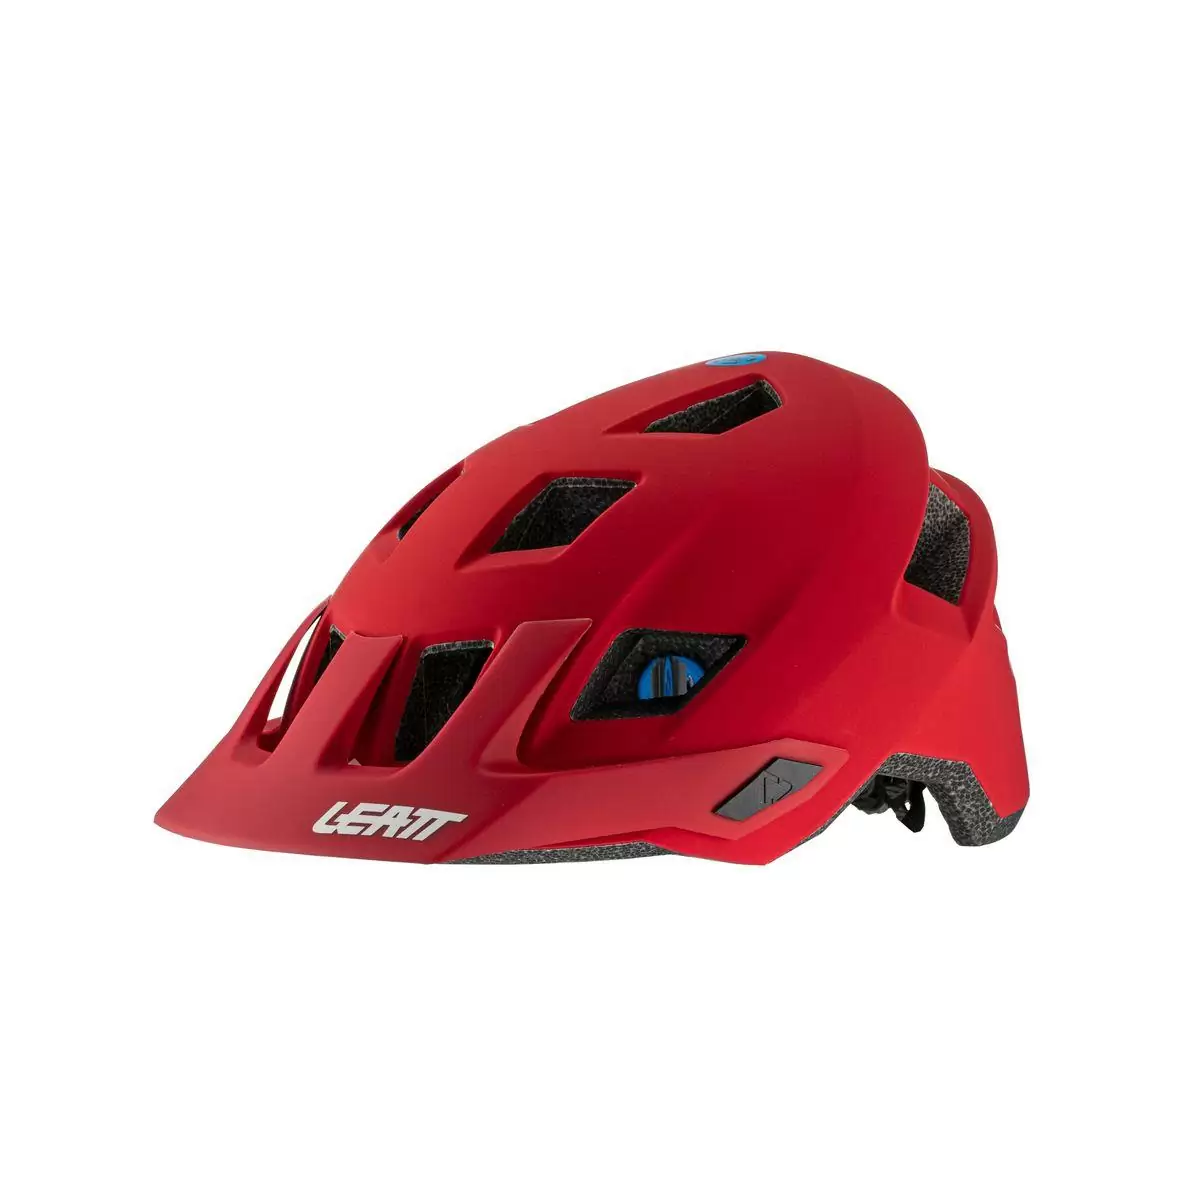 Helmet MTB 1.0 Turbine Technology Red Size S (51-55cm) - image